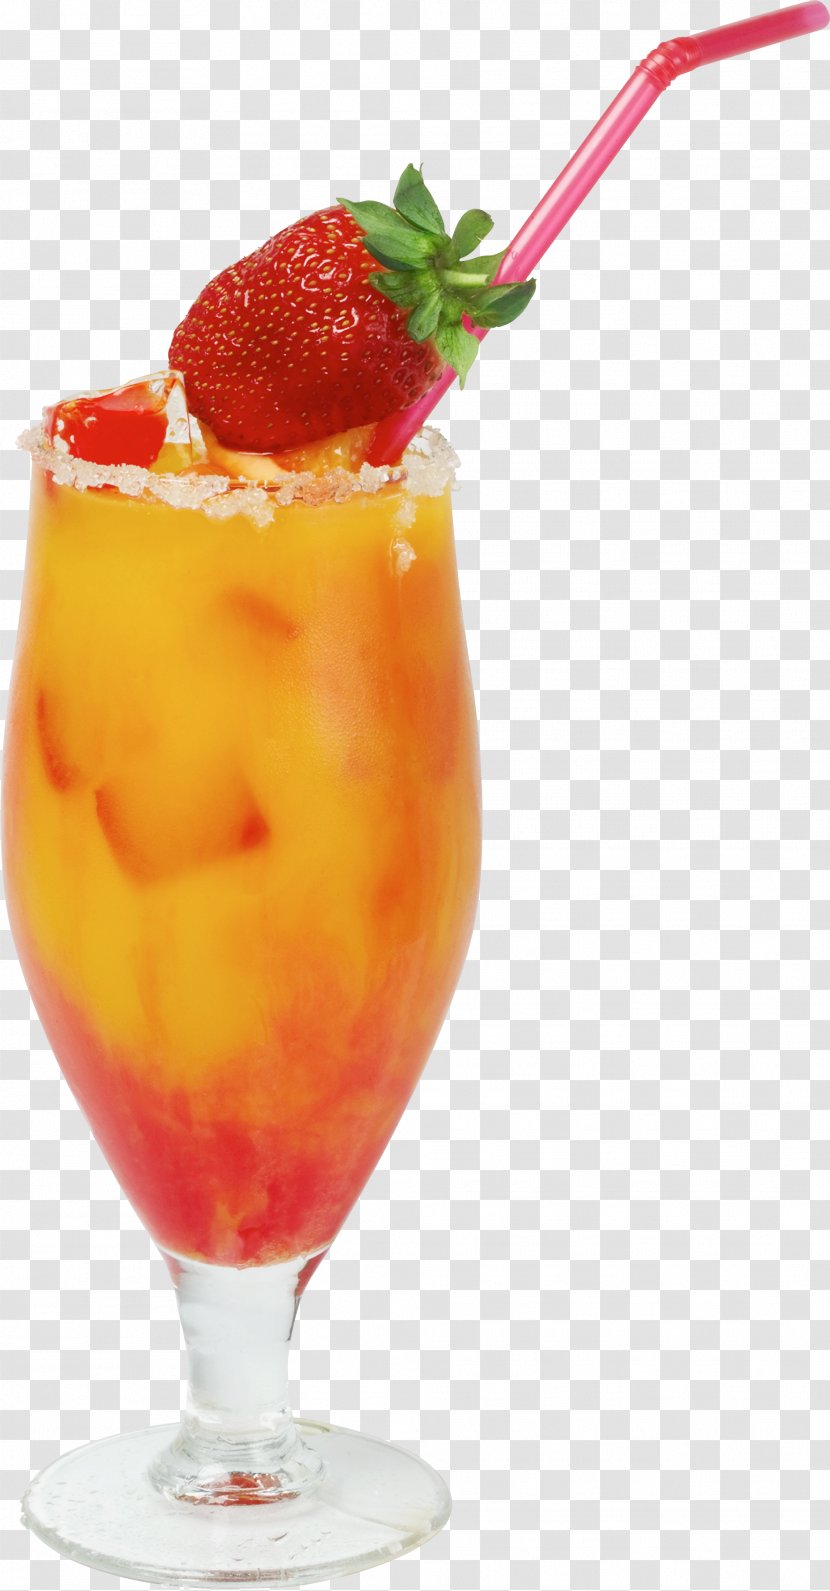 Cocktail Juice Fizzy Drinks Caipiroska Rum And Coke - Sea Breeze Transparent PNG